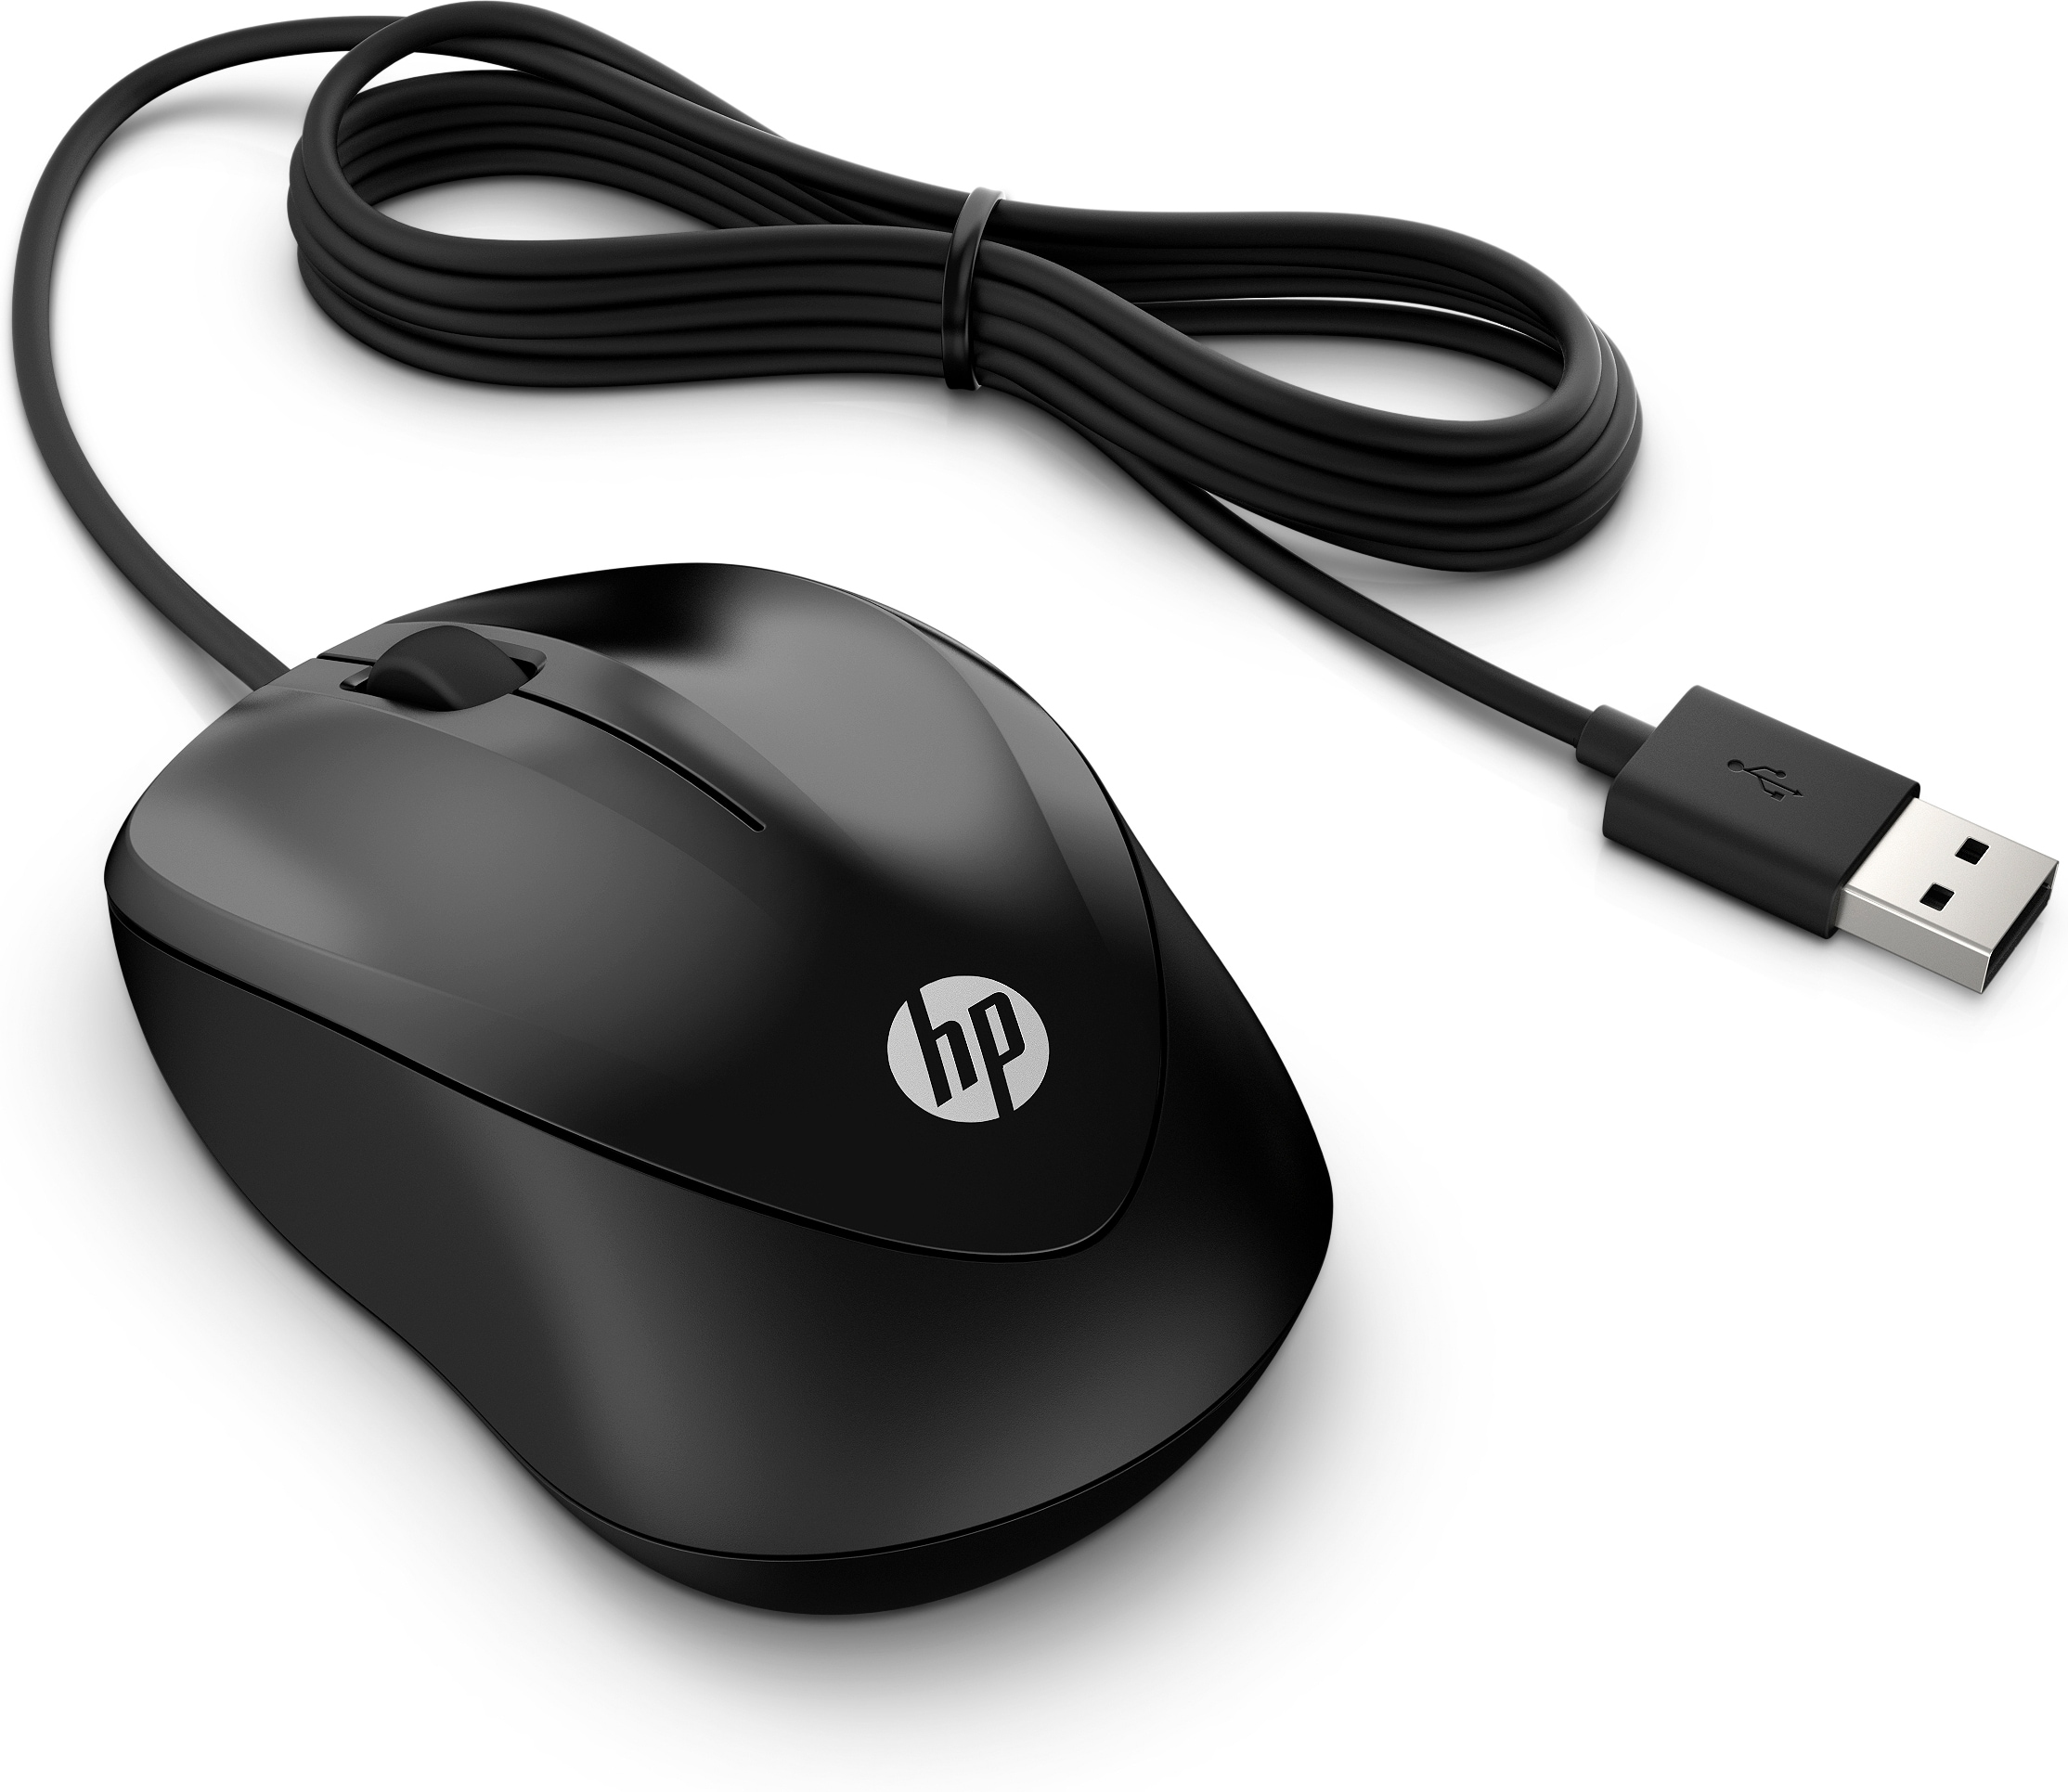 HP 4QM14AA - Beidhändig - USB Typ-A - 1200 DPI - Schwarz